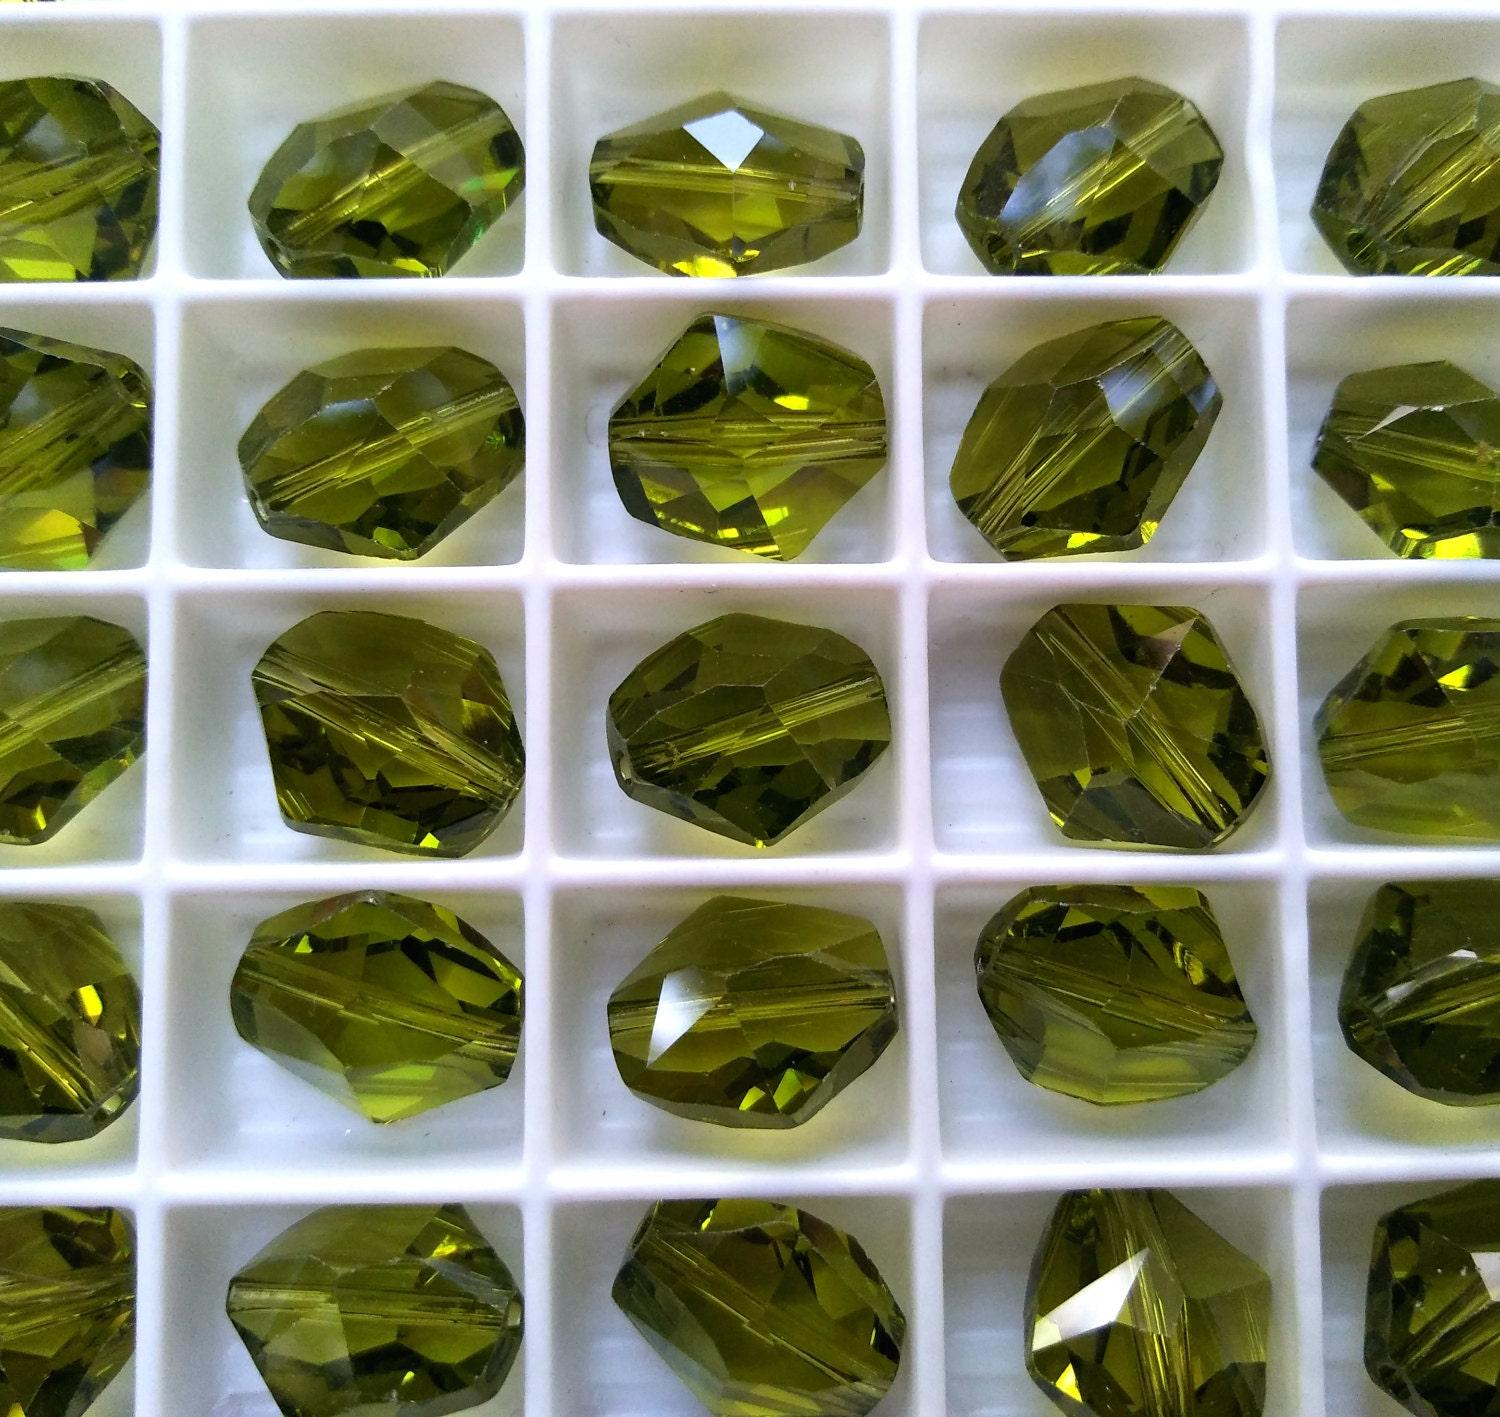 Buy Swarovski 5020 4mm Helix Beads Crystal AB (36 pieces)